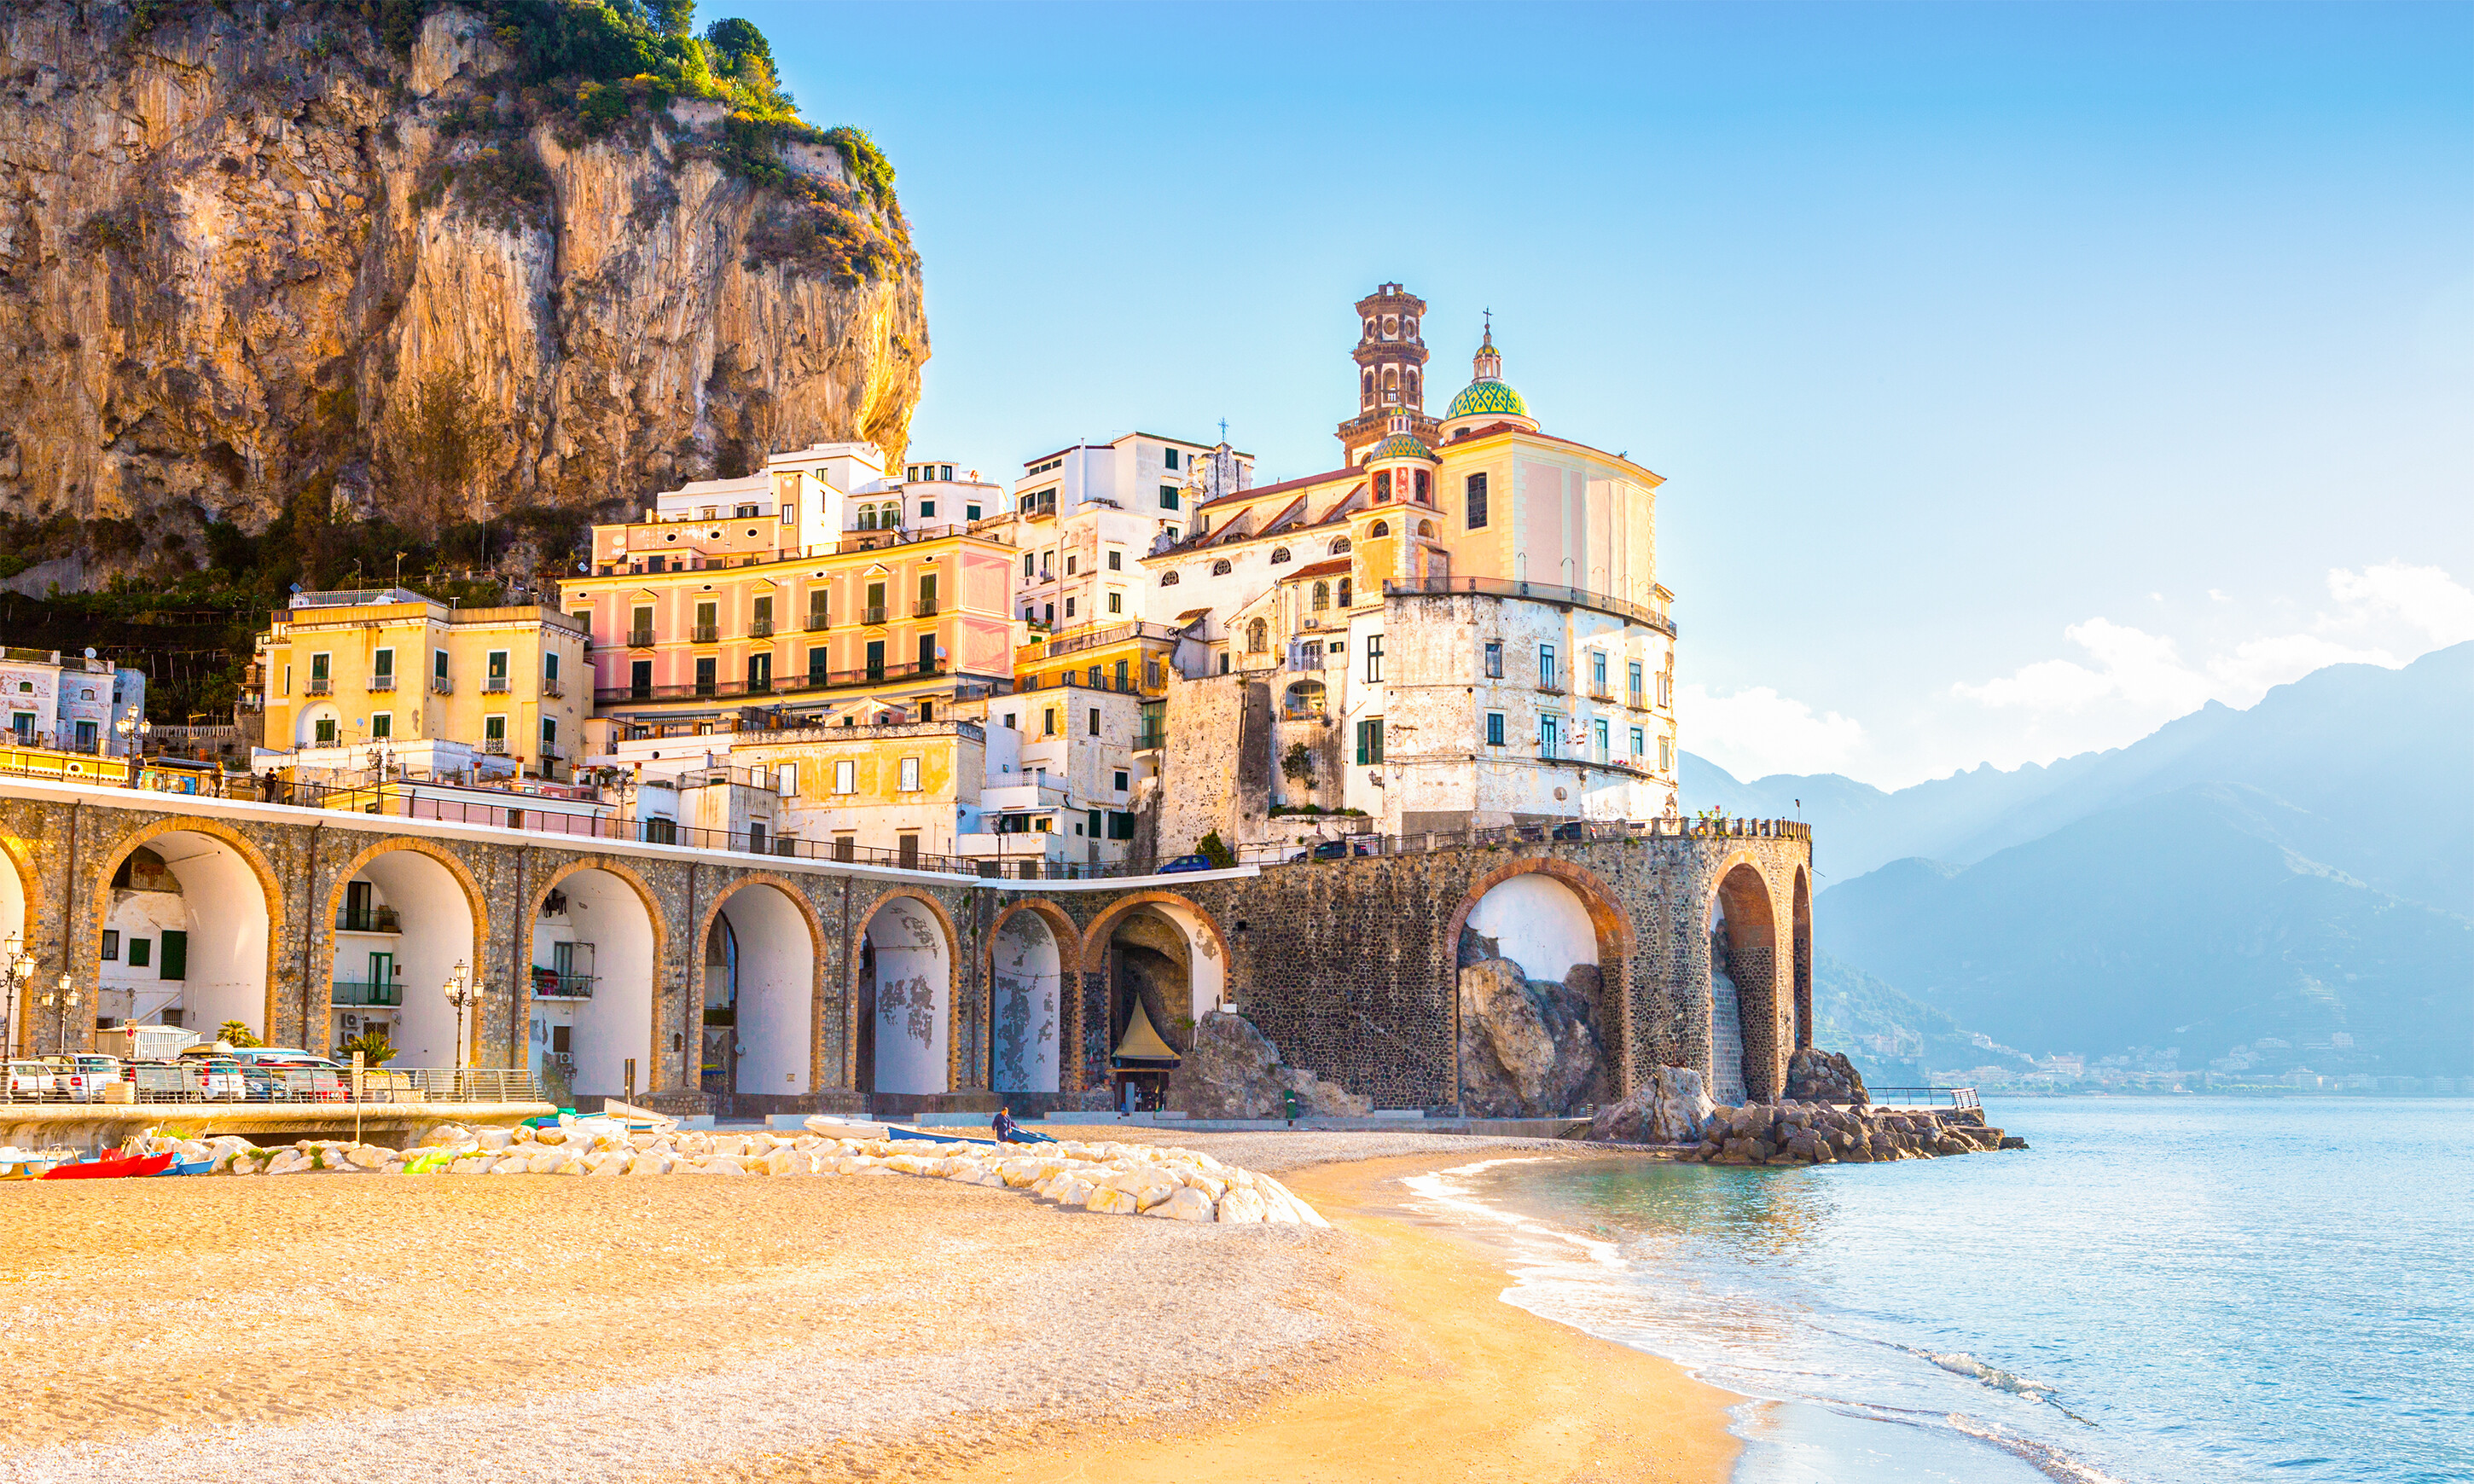 Positano Apartment Vacation Rentals - Campania, Italy